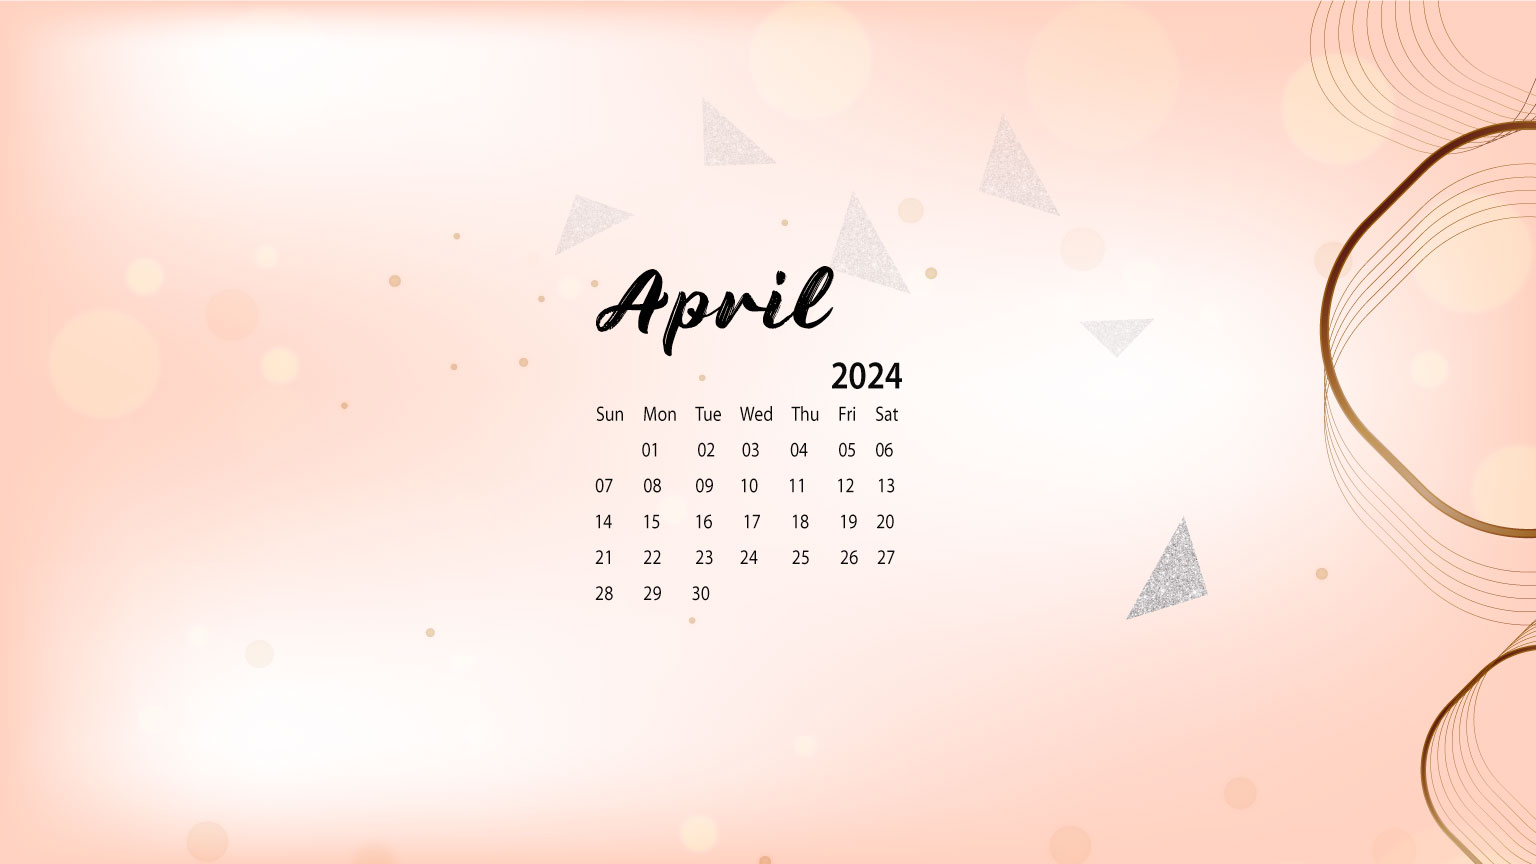 April 2024 Desktop Wallpaper Calendar - Calendarlabs regarding April 2024 Calendar Desktop Wallpaper